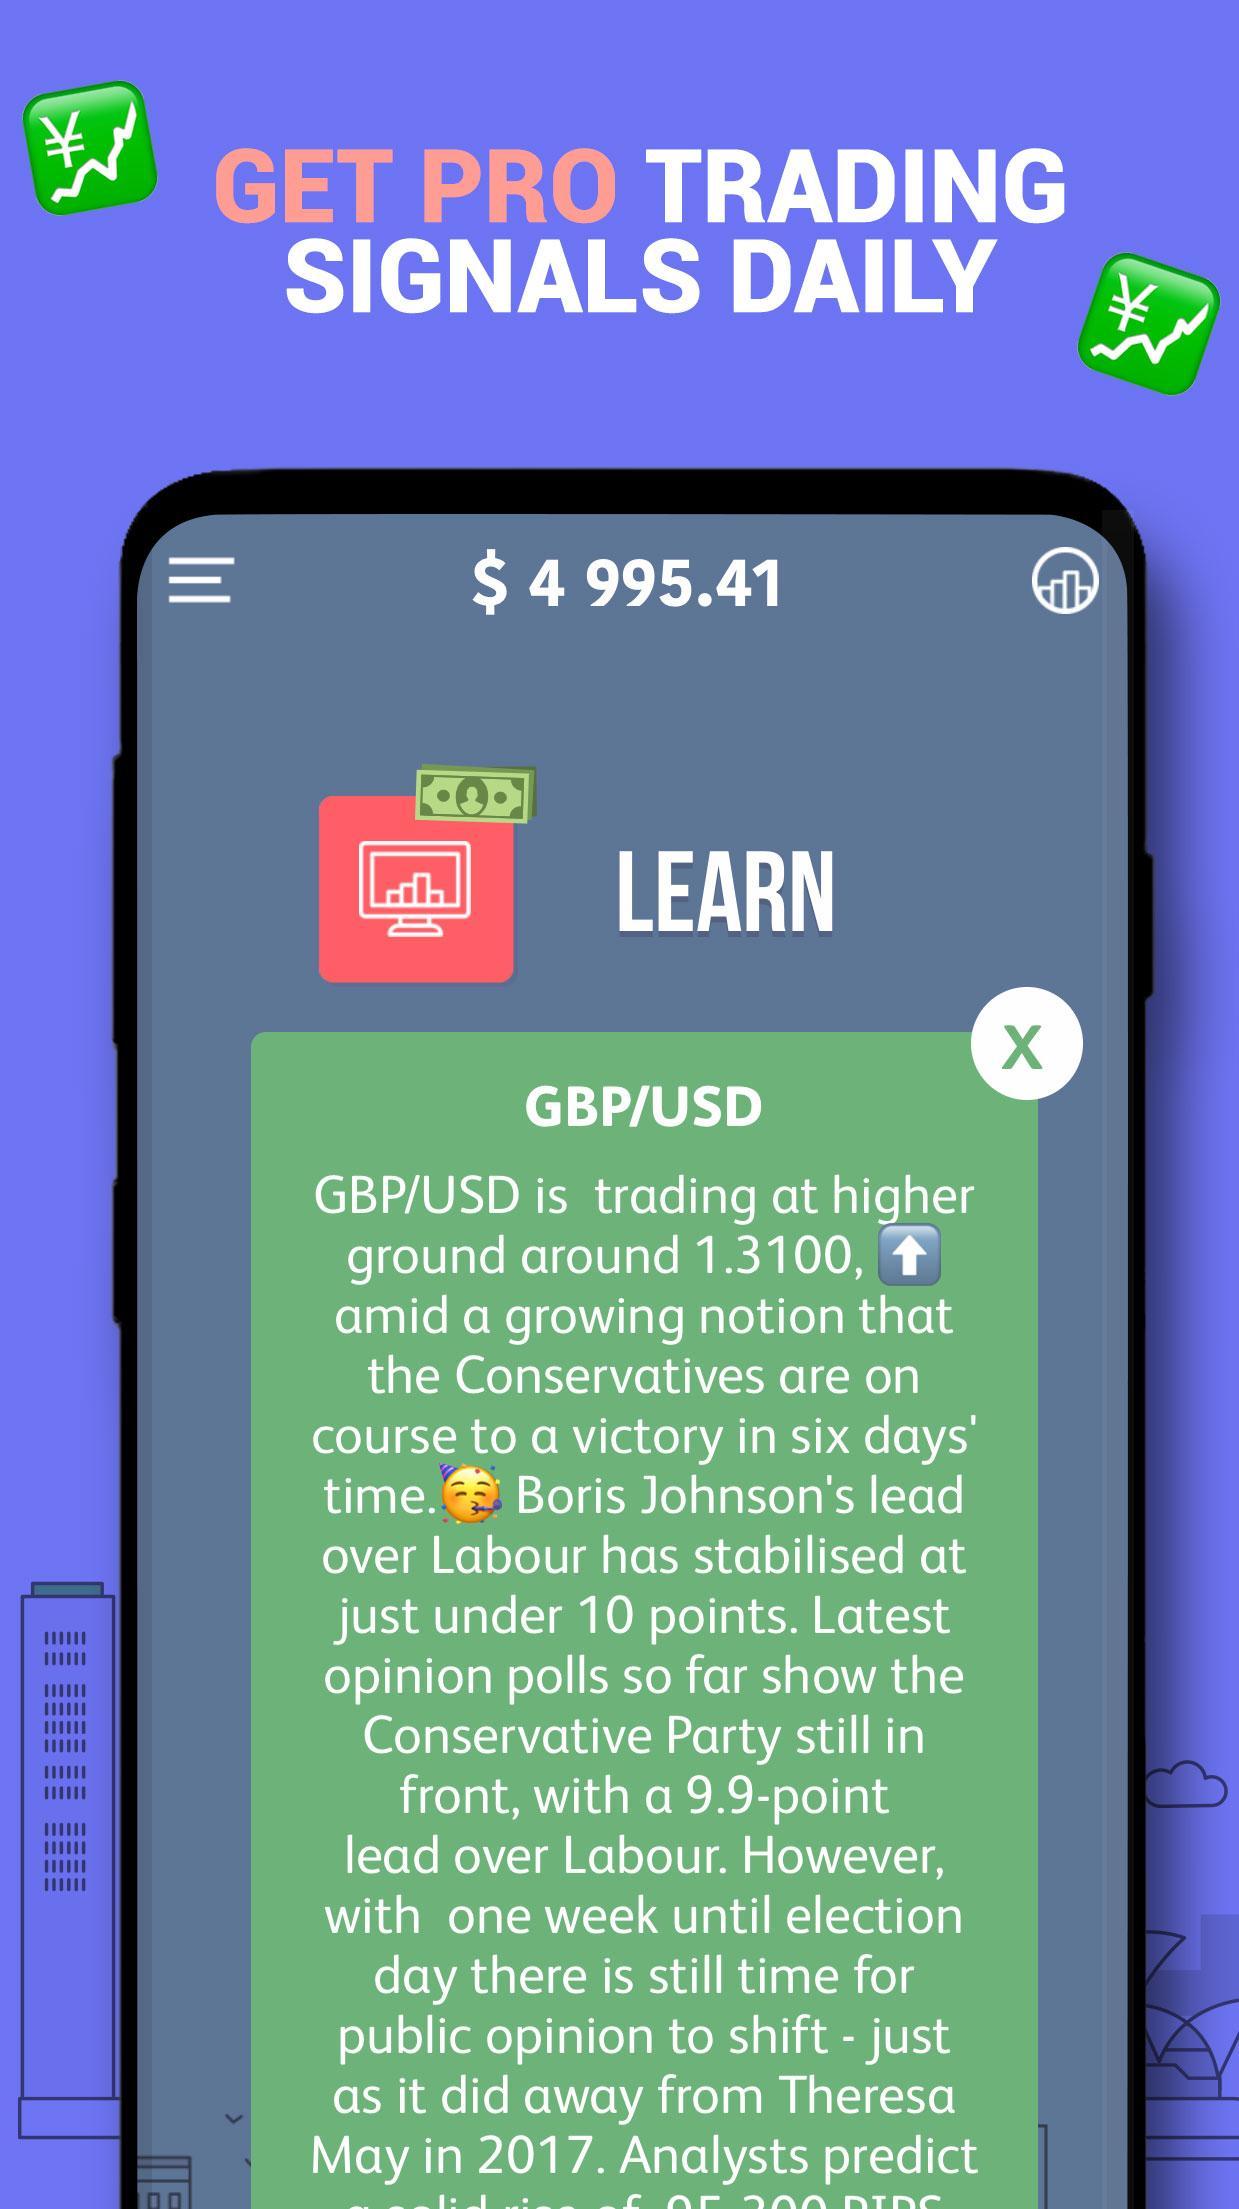 Shares & Forex Investing simulator - Trading Game 2.4.0 Screenshot 5